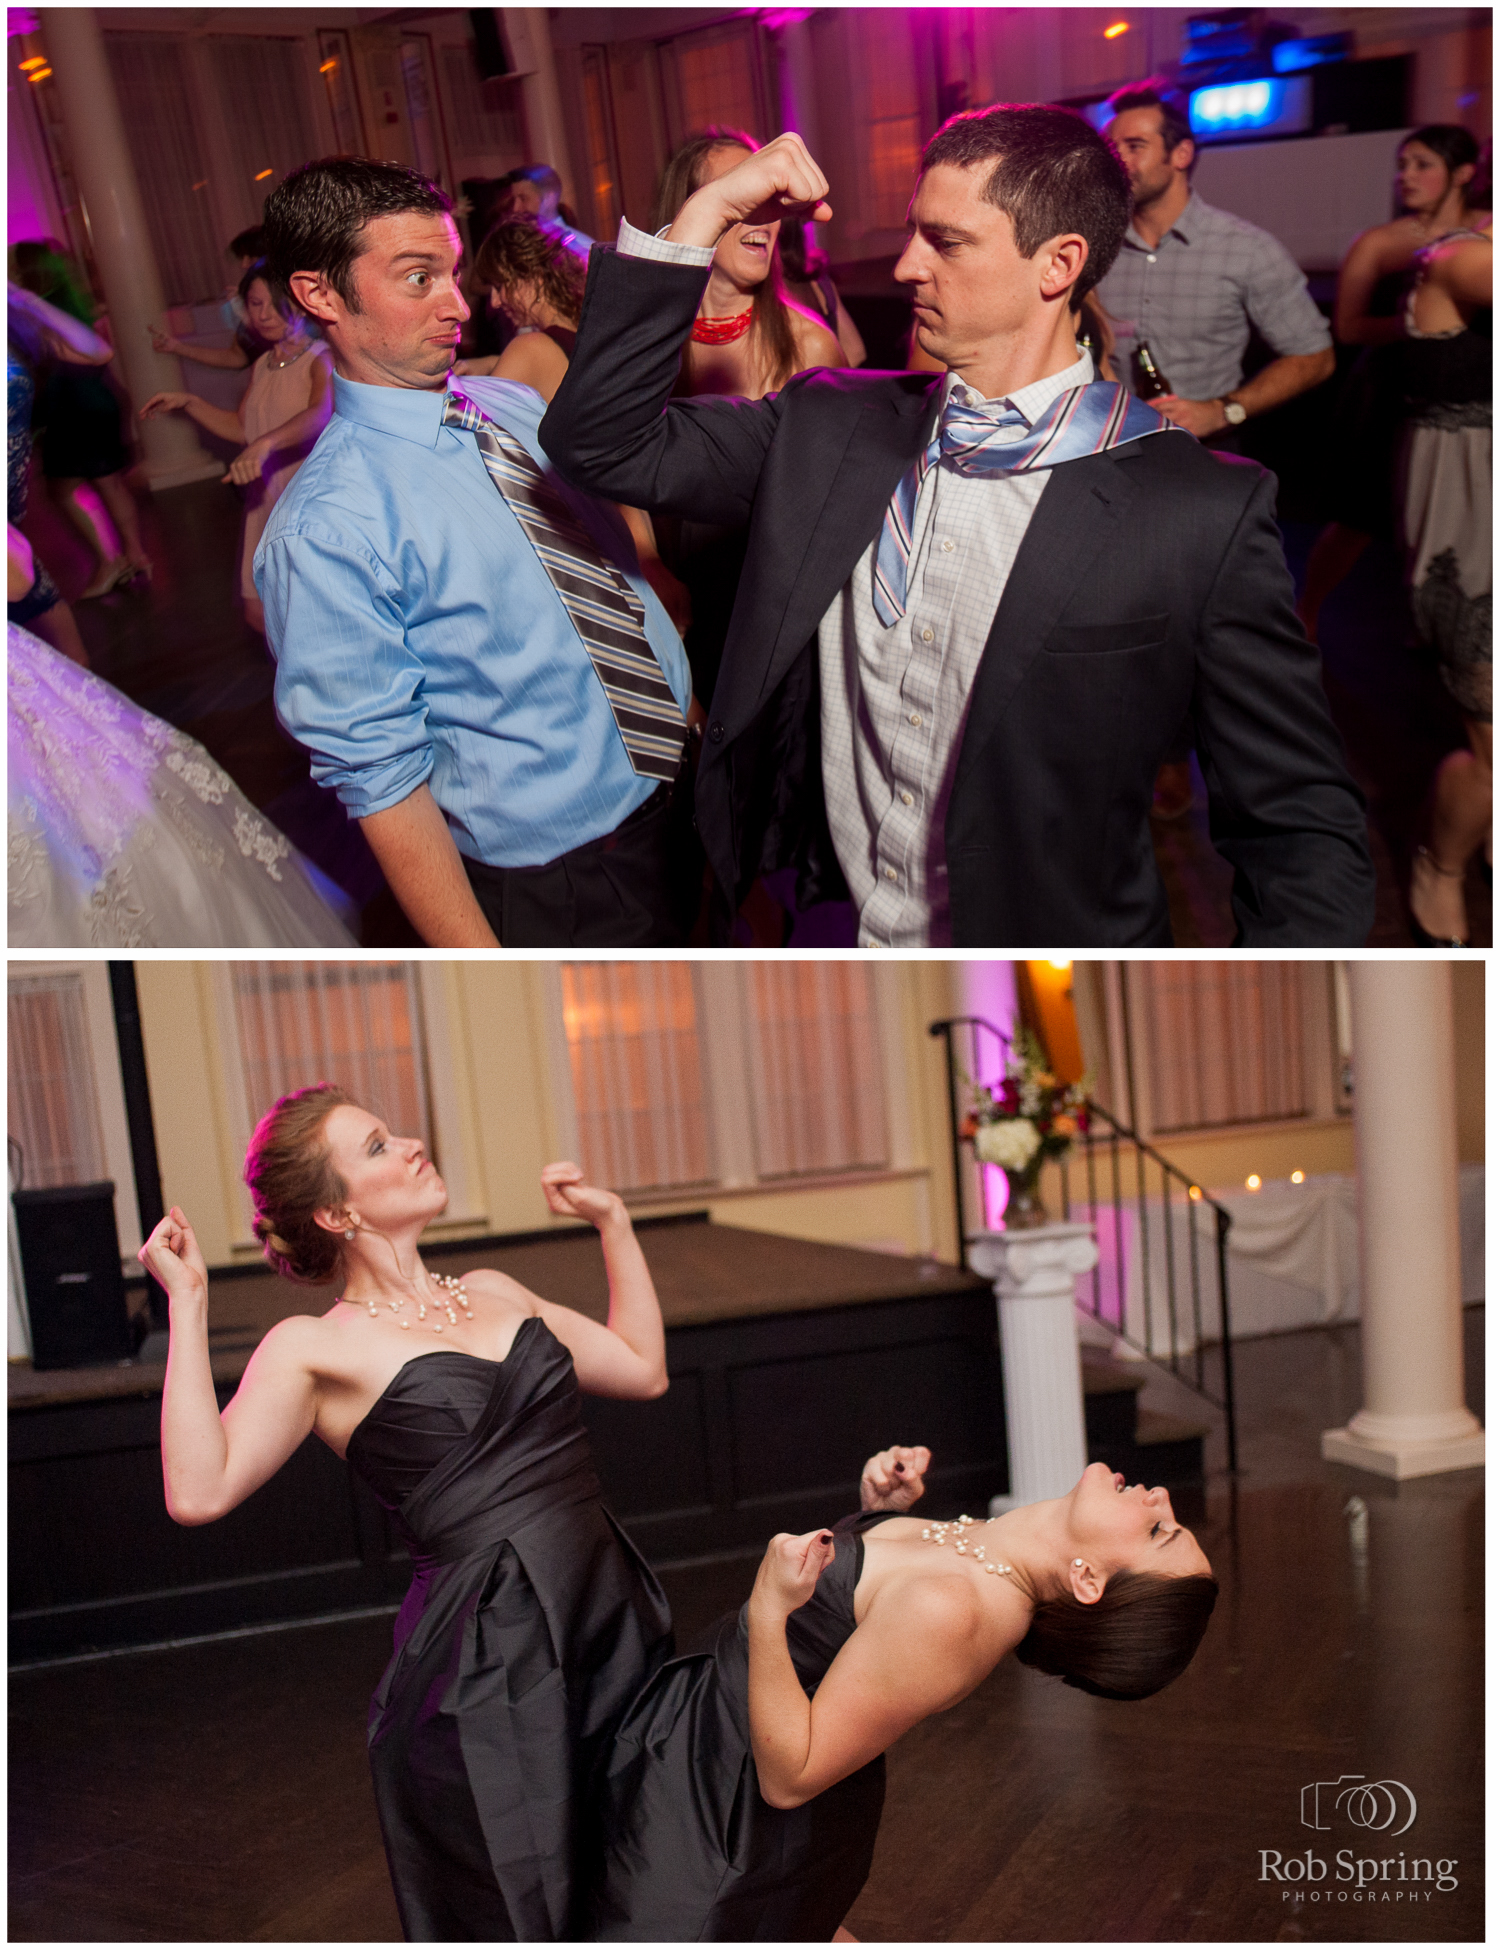 Canfield Casino Wedding dancing photos reception uplighting